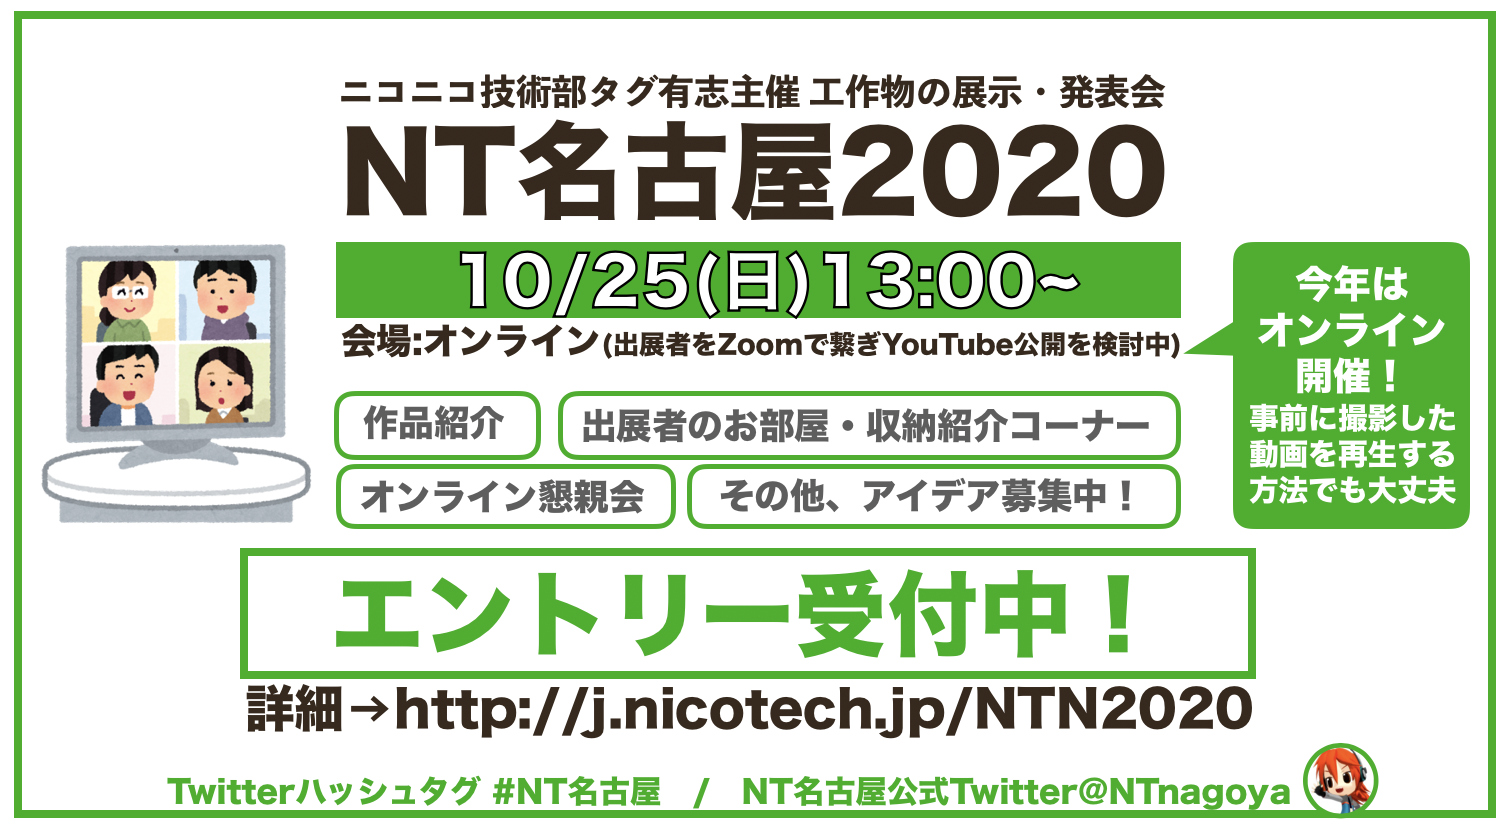 NT名古屋2020_エントリー受付中.png